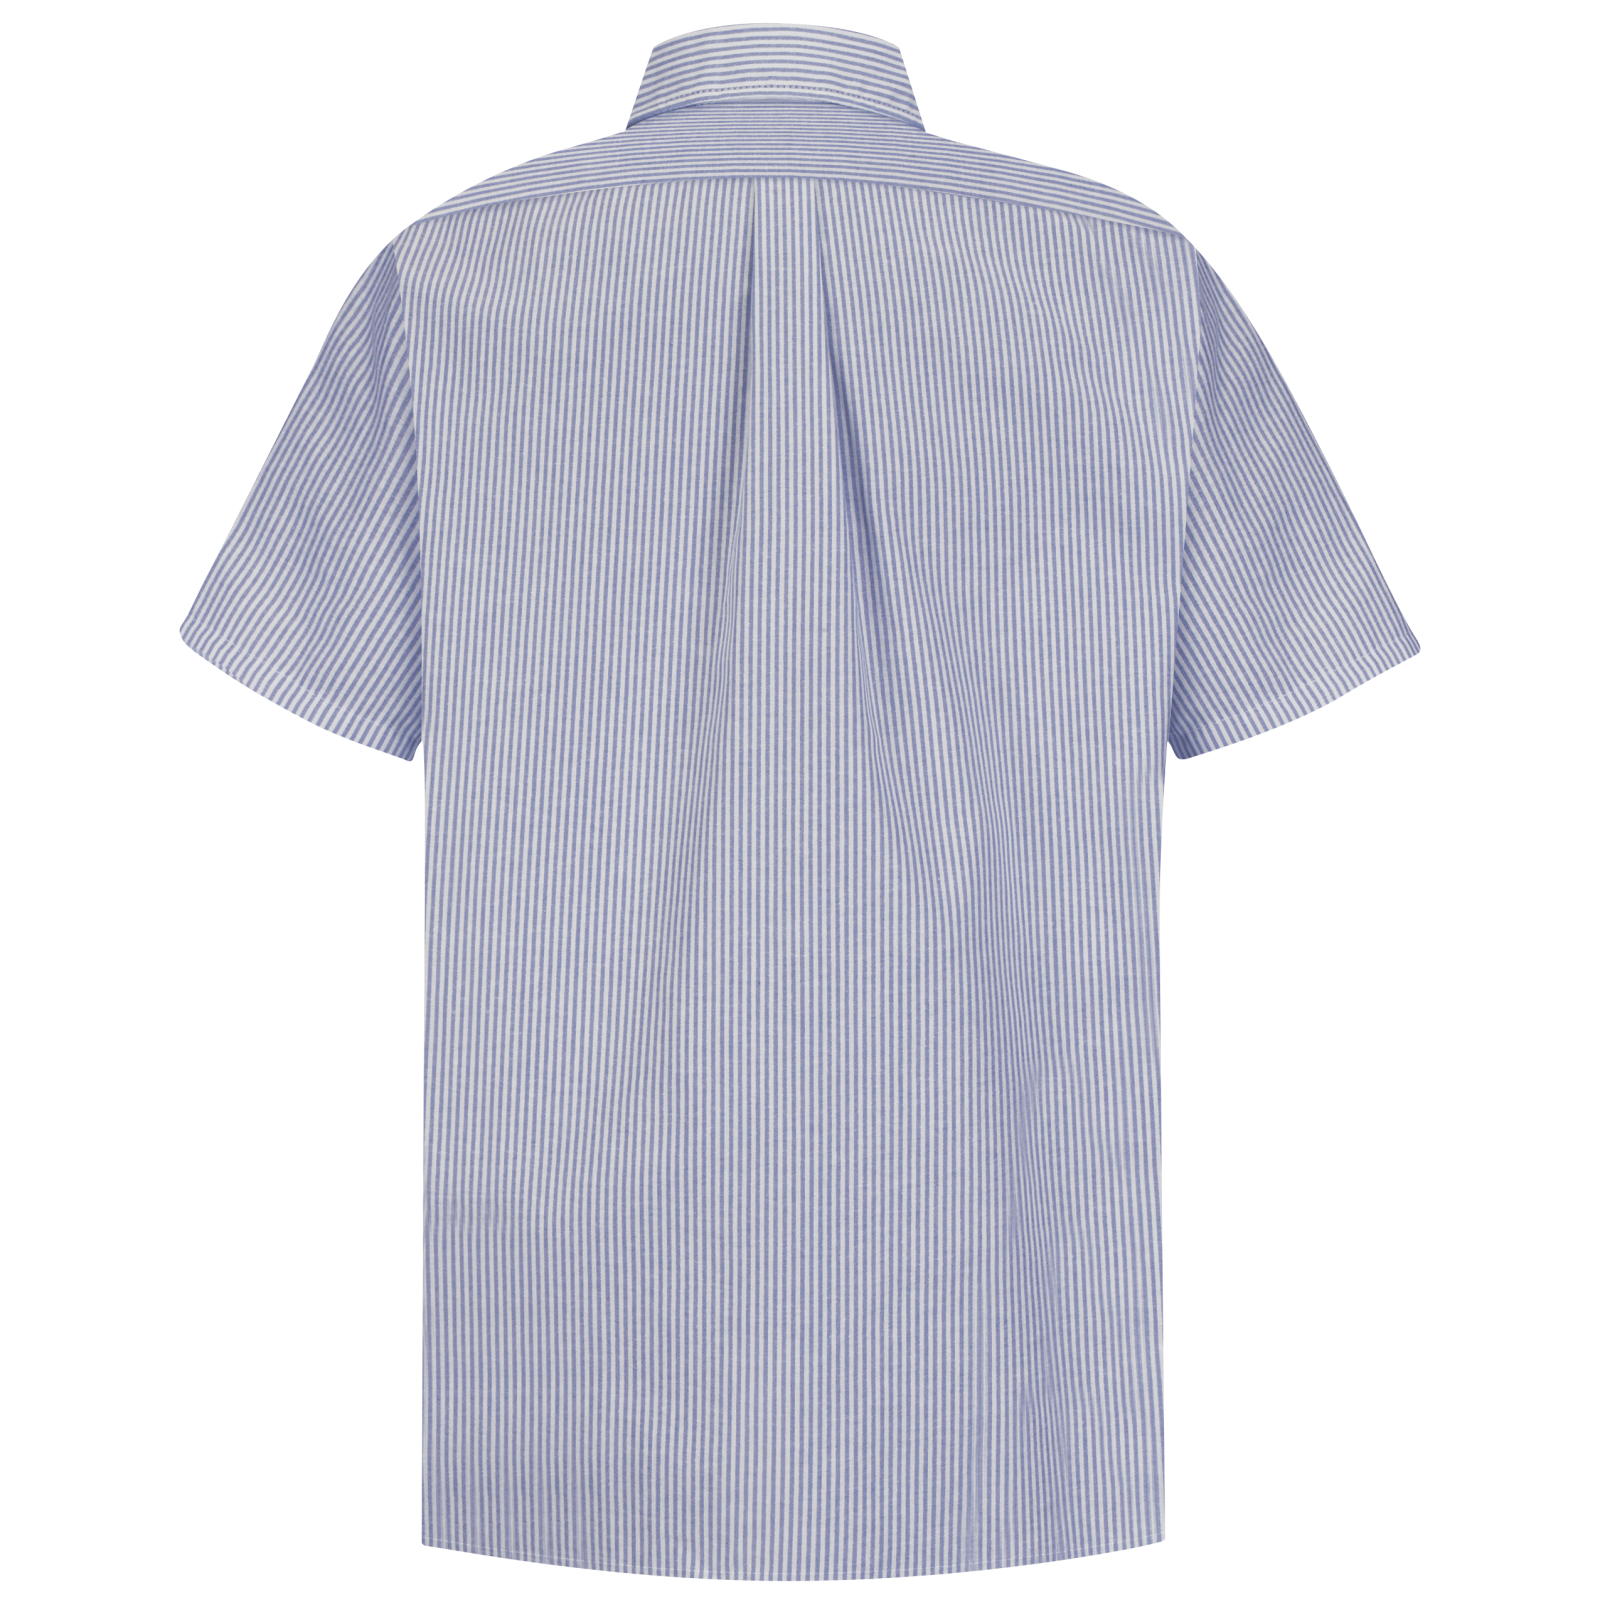 Men's Short Sleeve Executive Oxford Dress Shirt